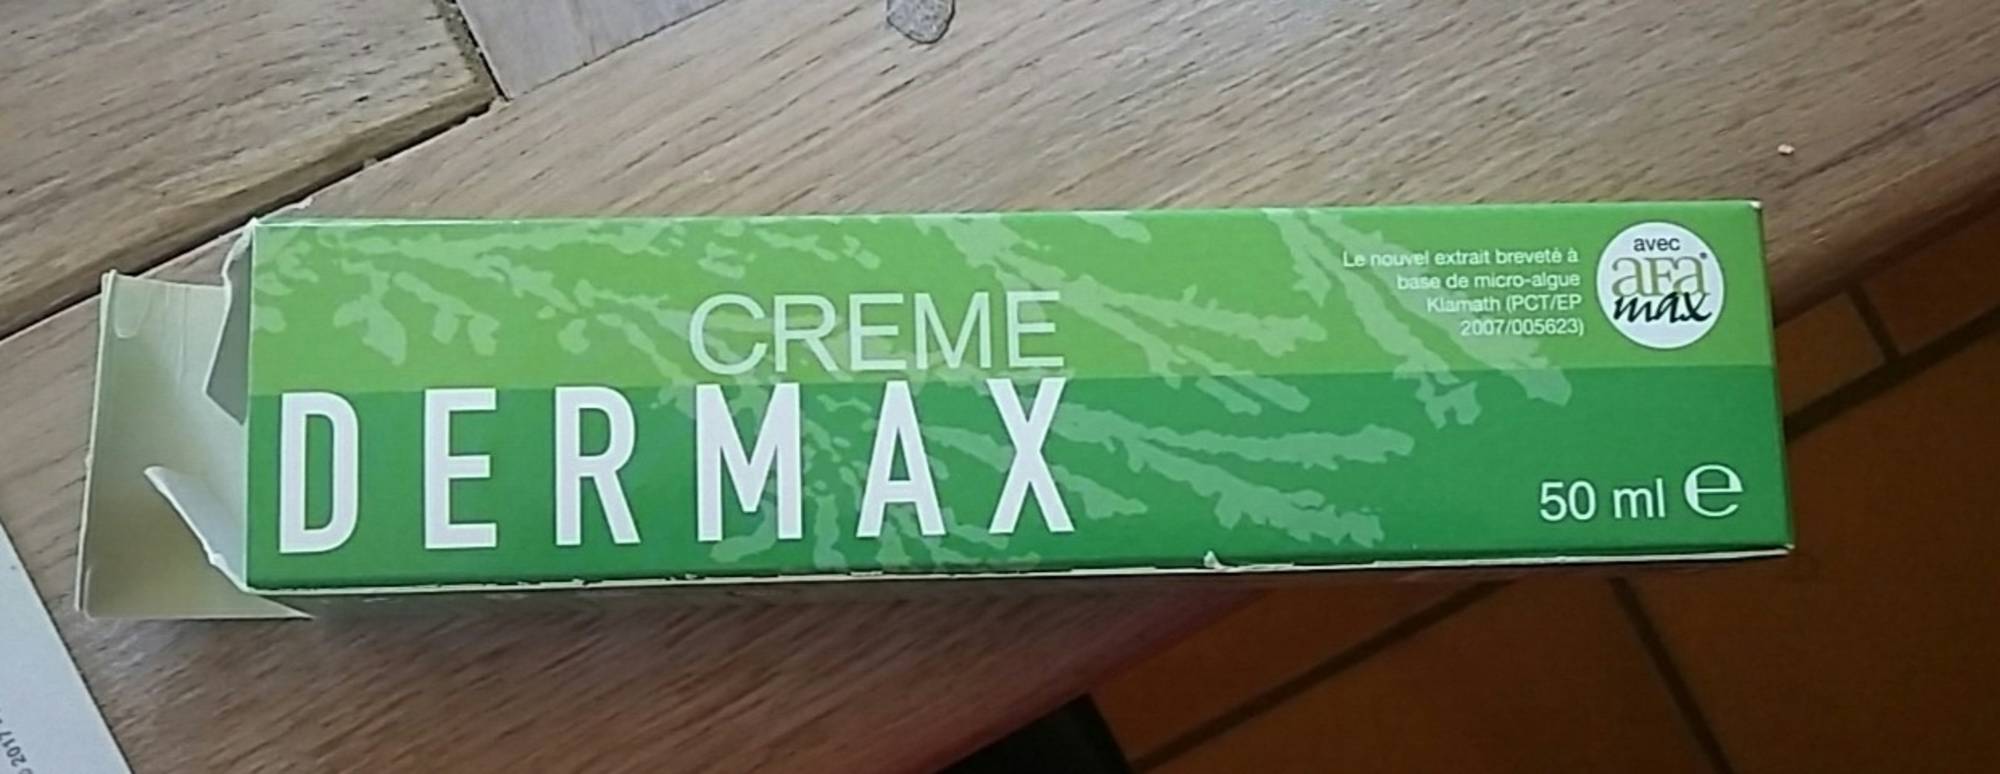 NUTRIGEA - Crème dermax